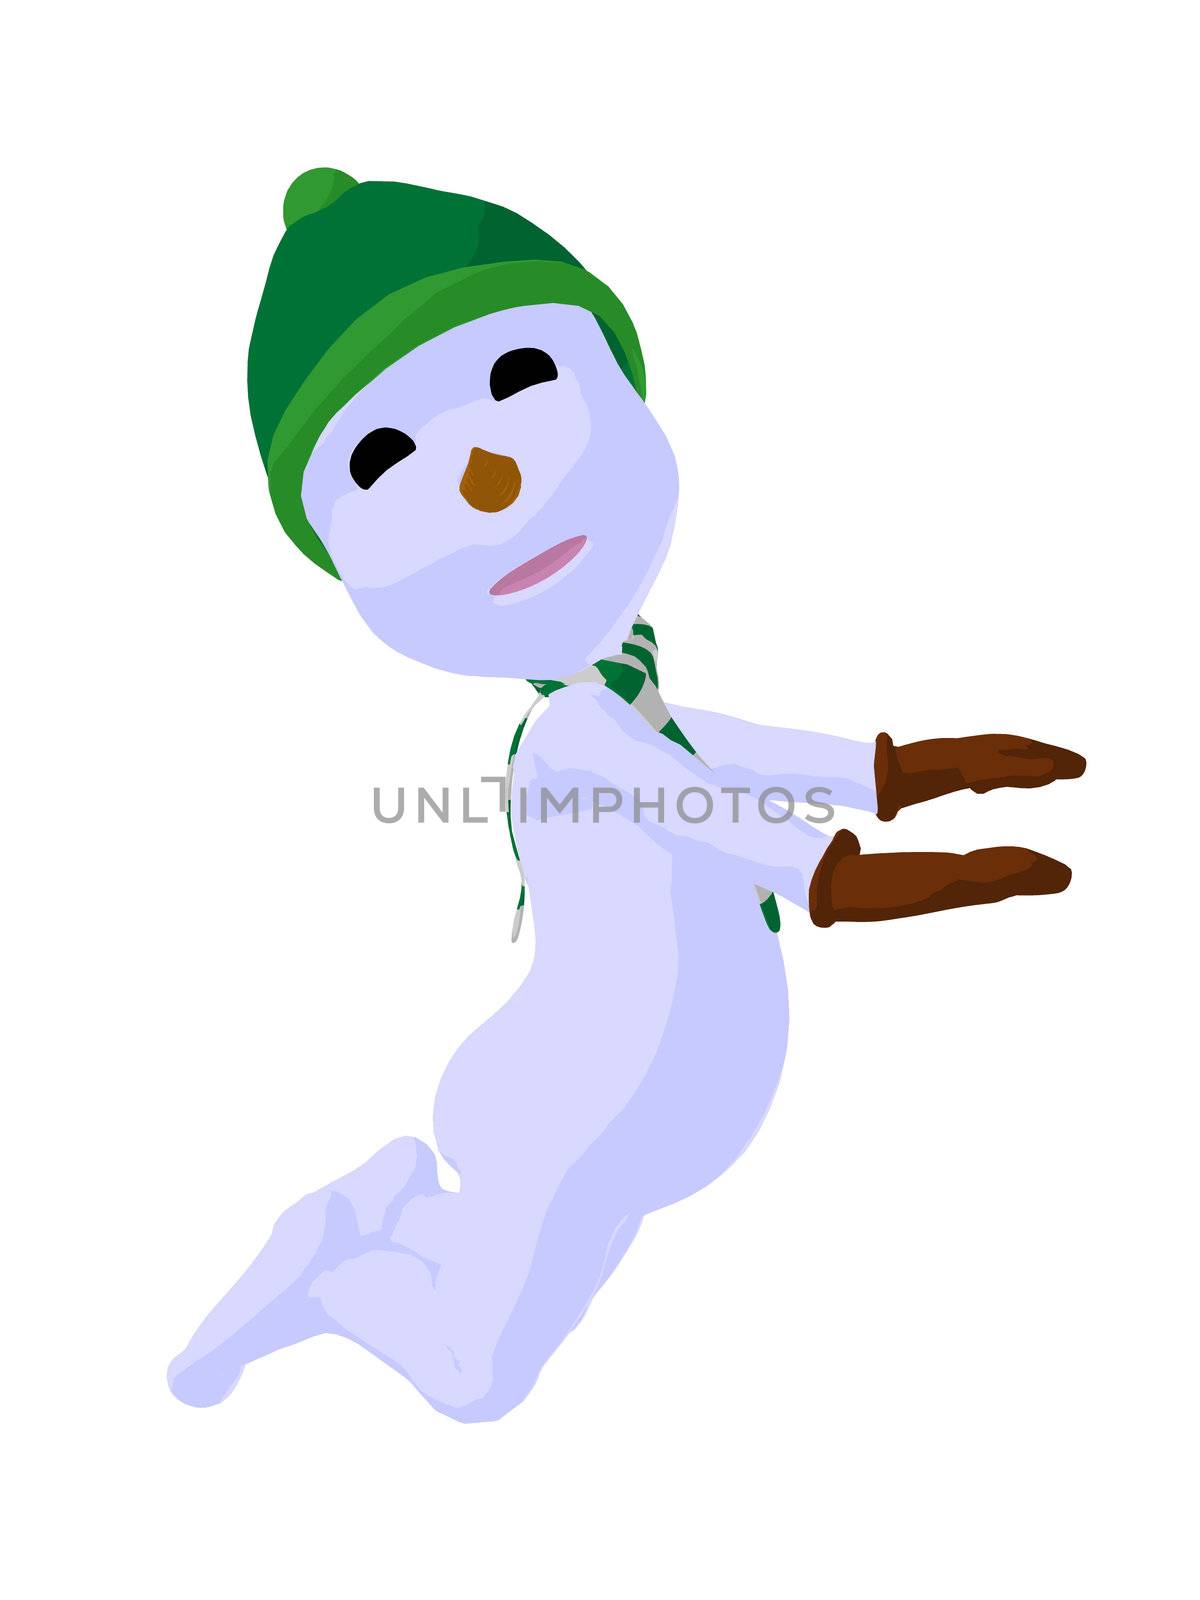 Snowboy silhouette illustration on a white background